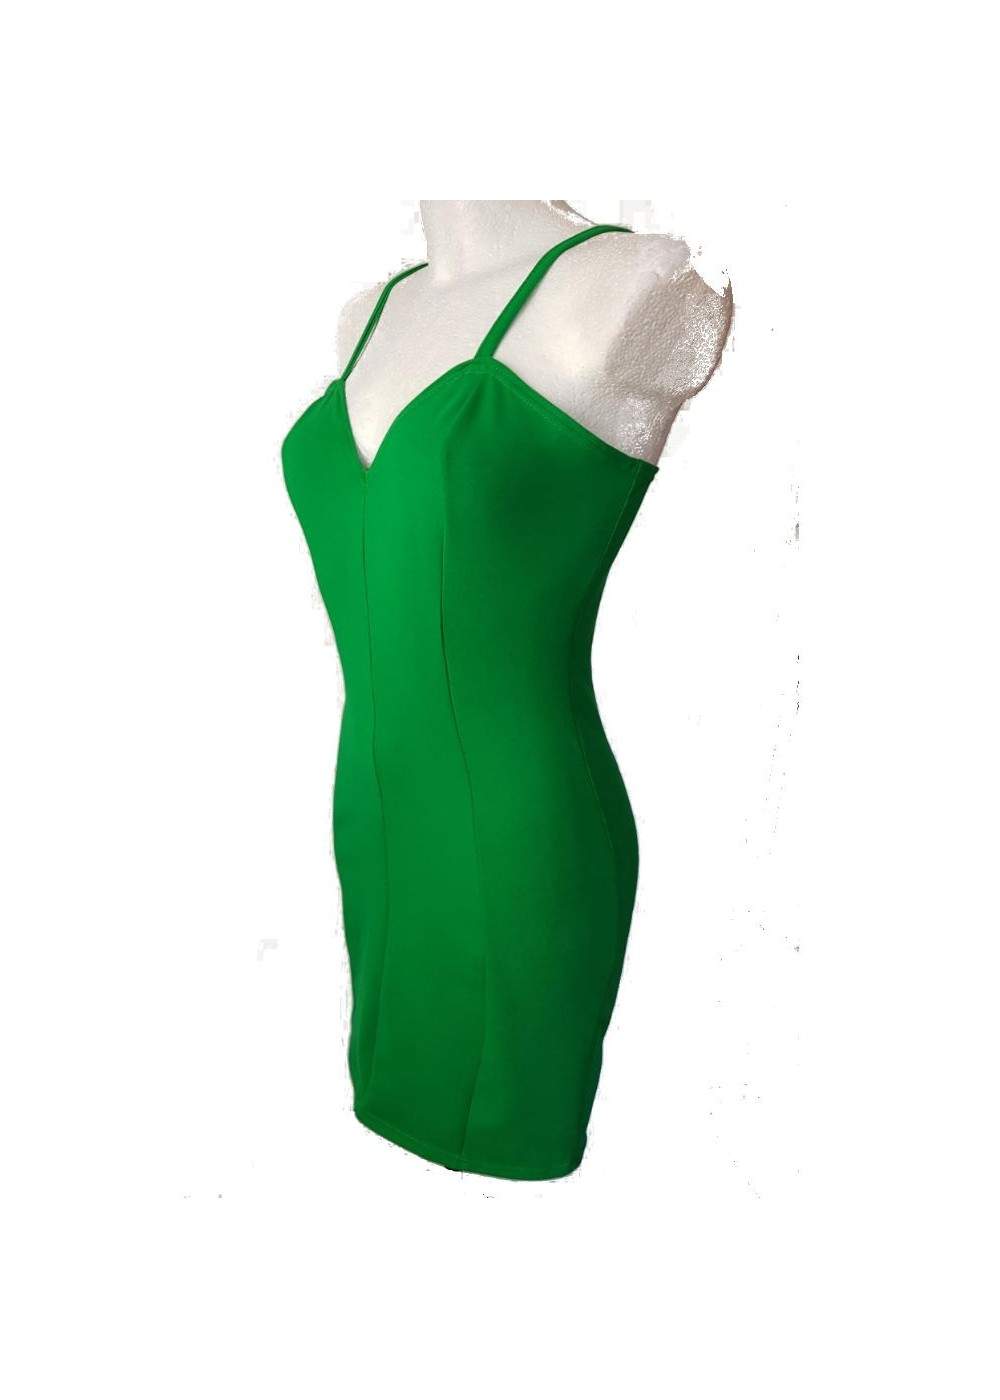 Green Stretch Cotton Strap Dress CockPart Dress Size 34 - 52 - 